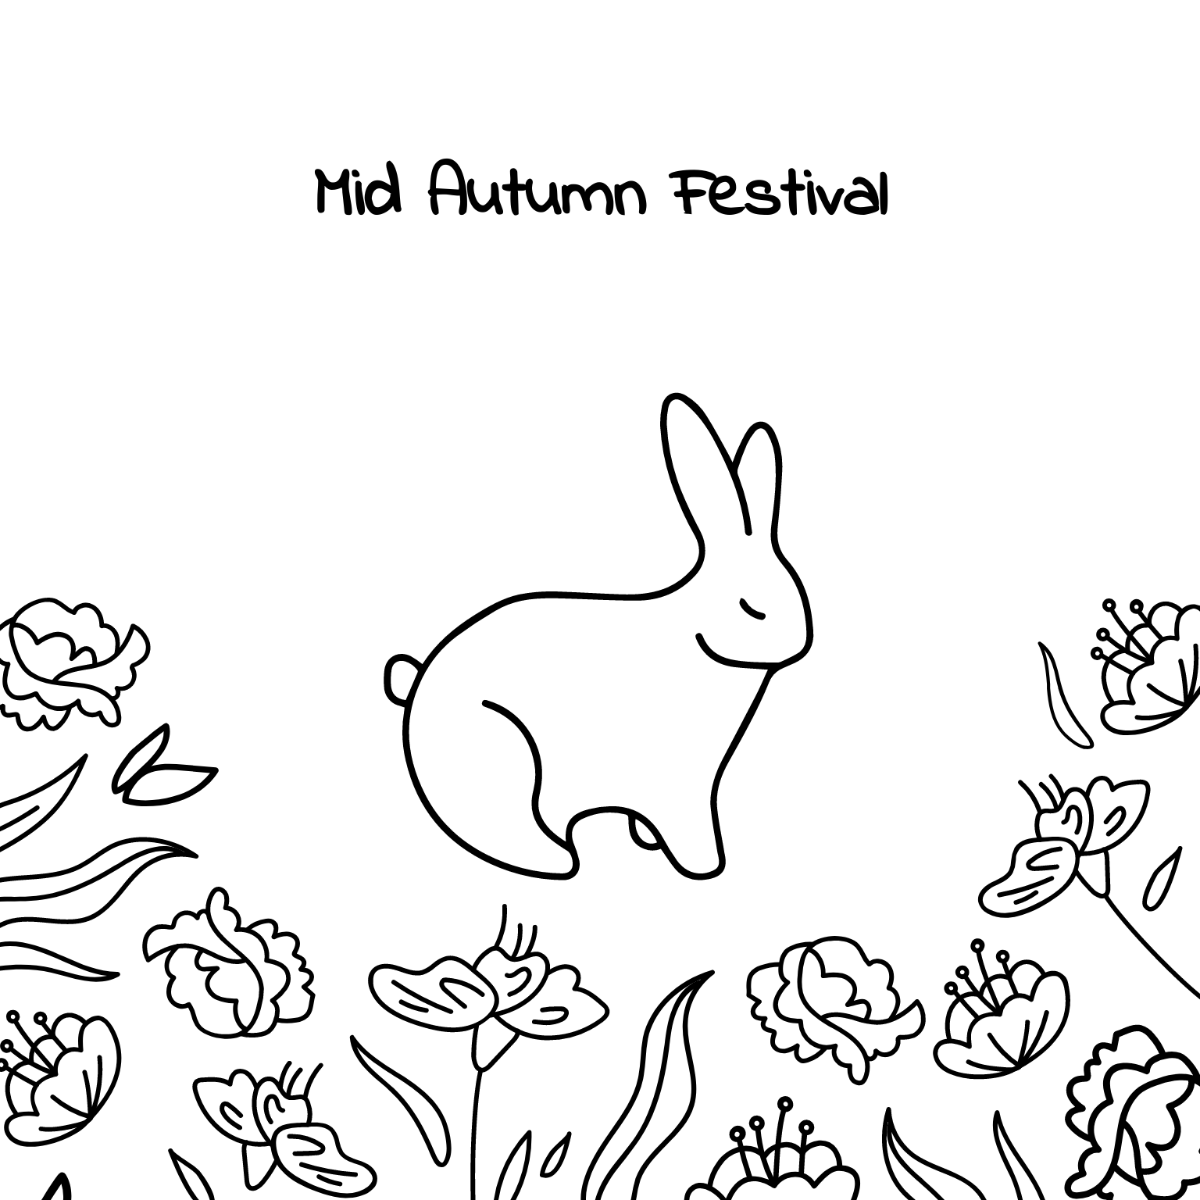 Mid-Autumn Festival Sketch Vector Template